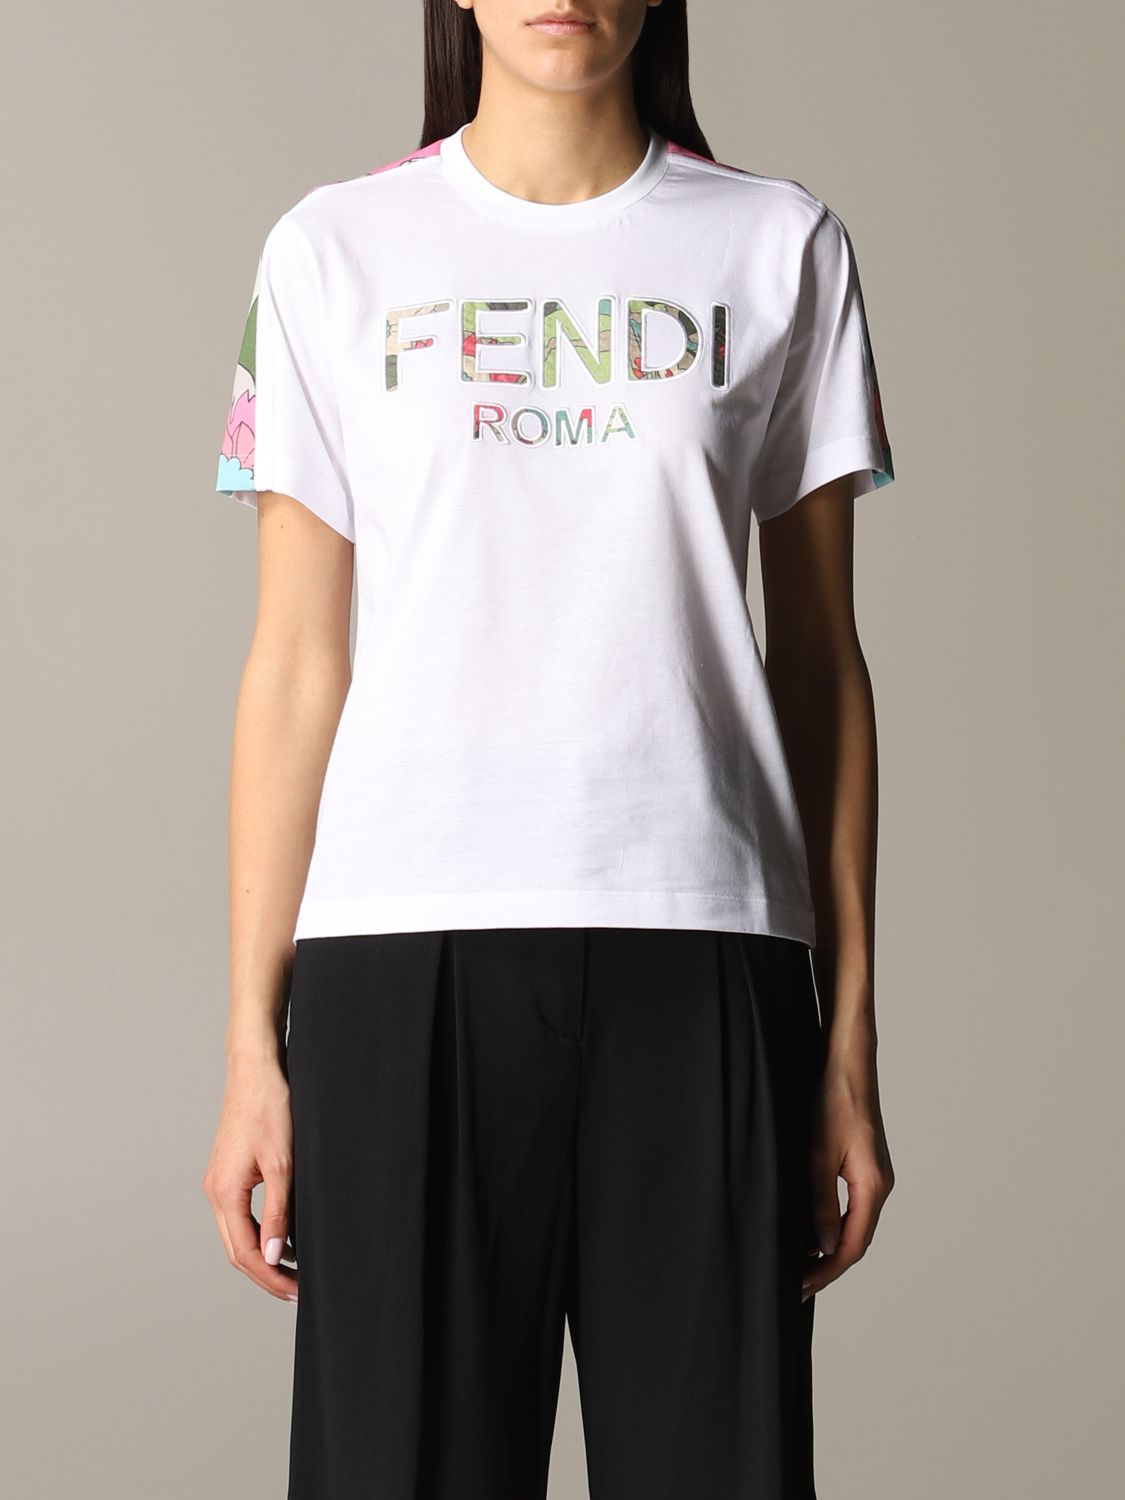 Fendi T Shirt White Outlet, 53% OFF | www.gruposincom.es